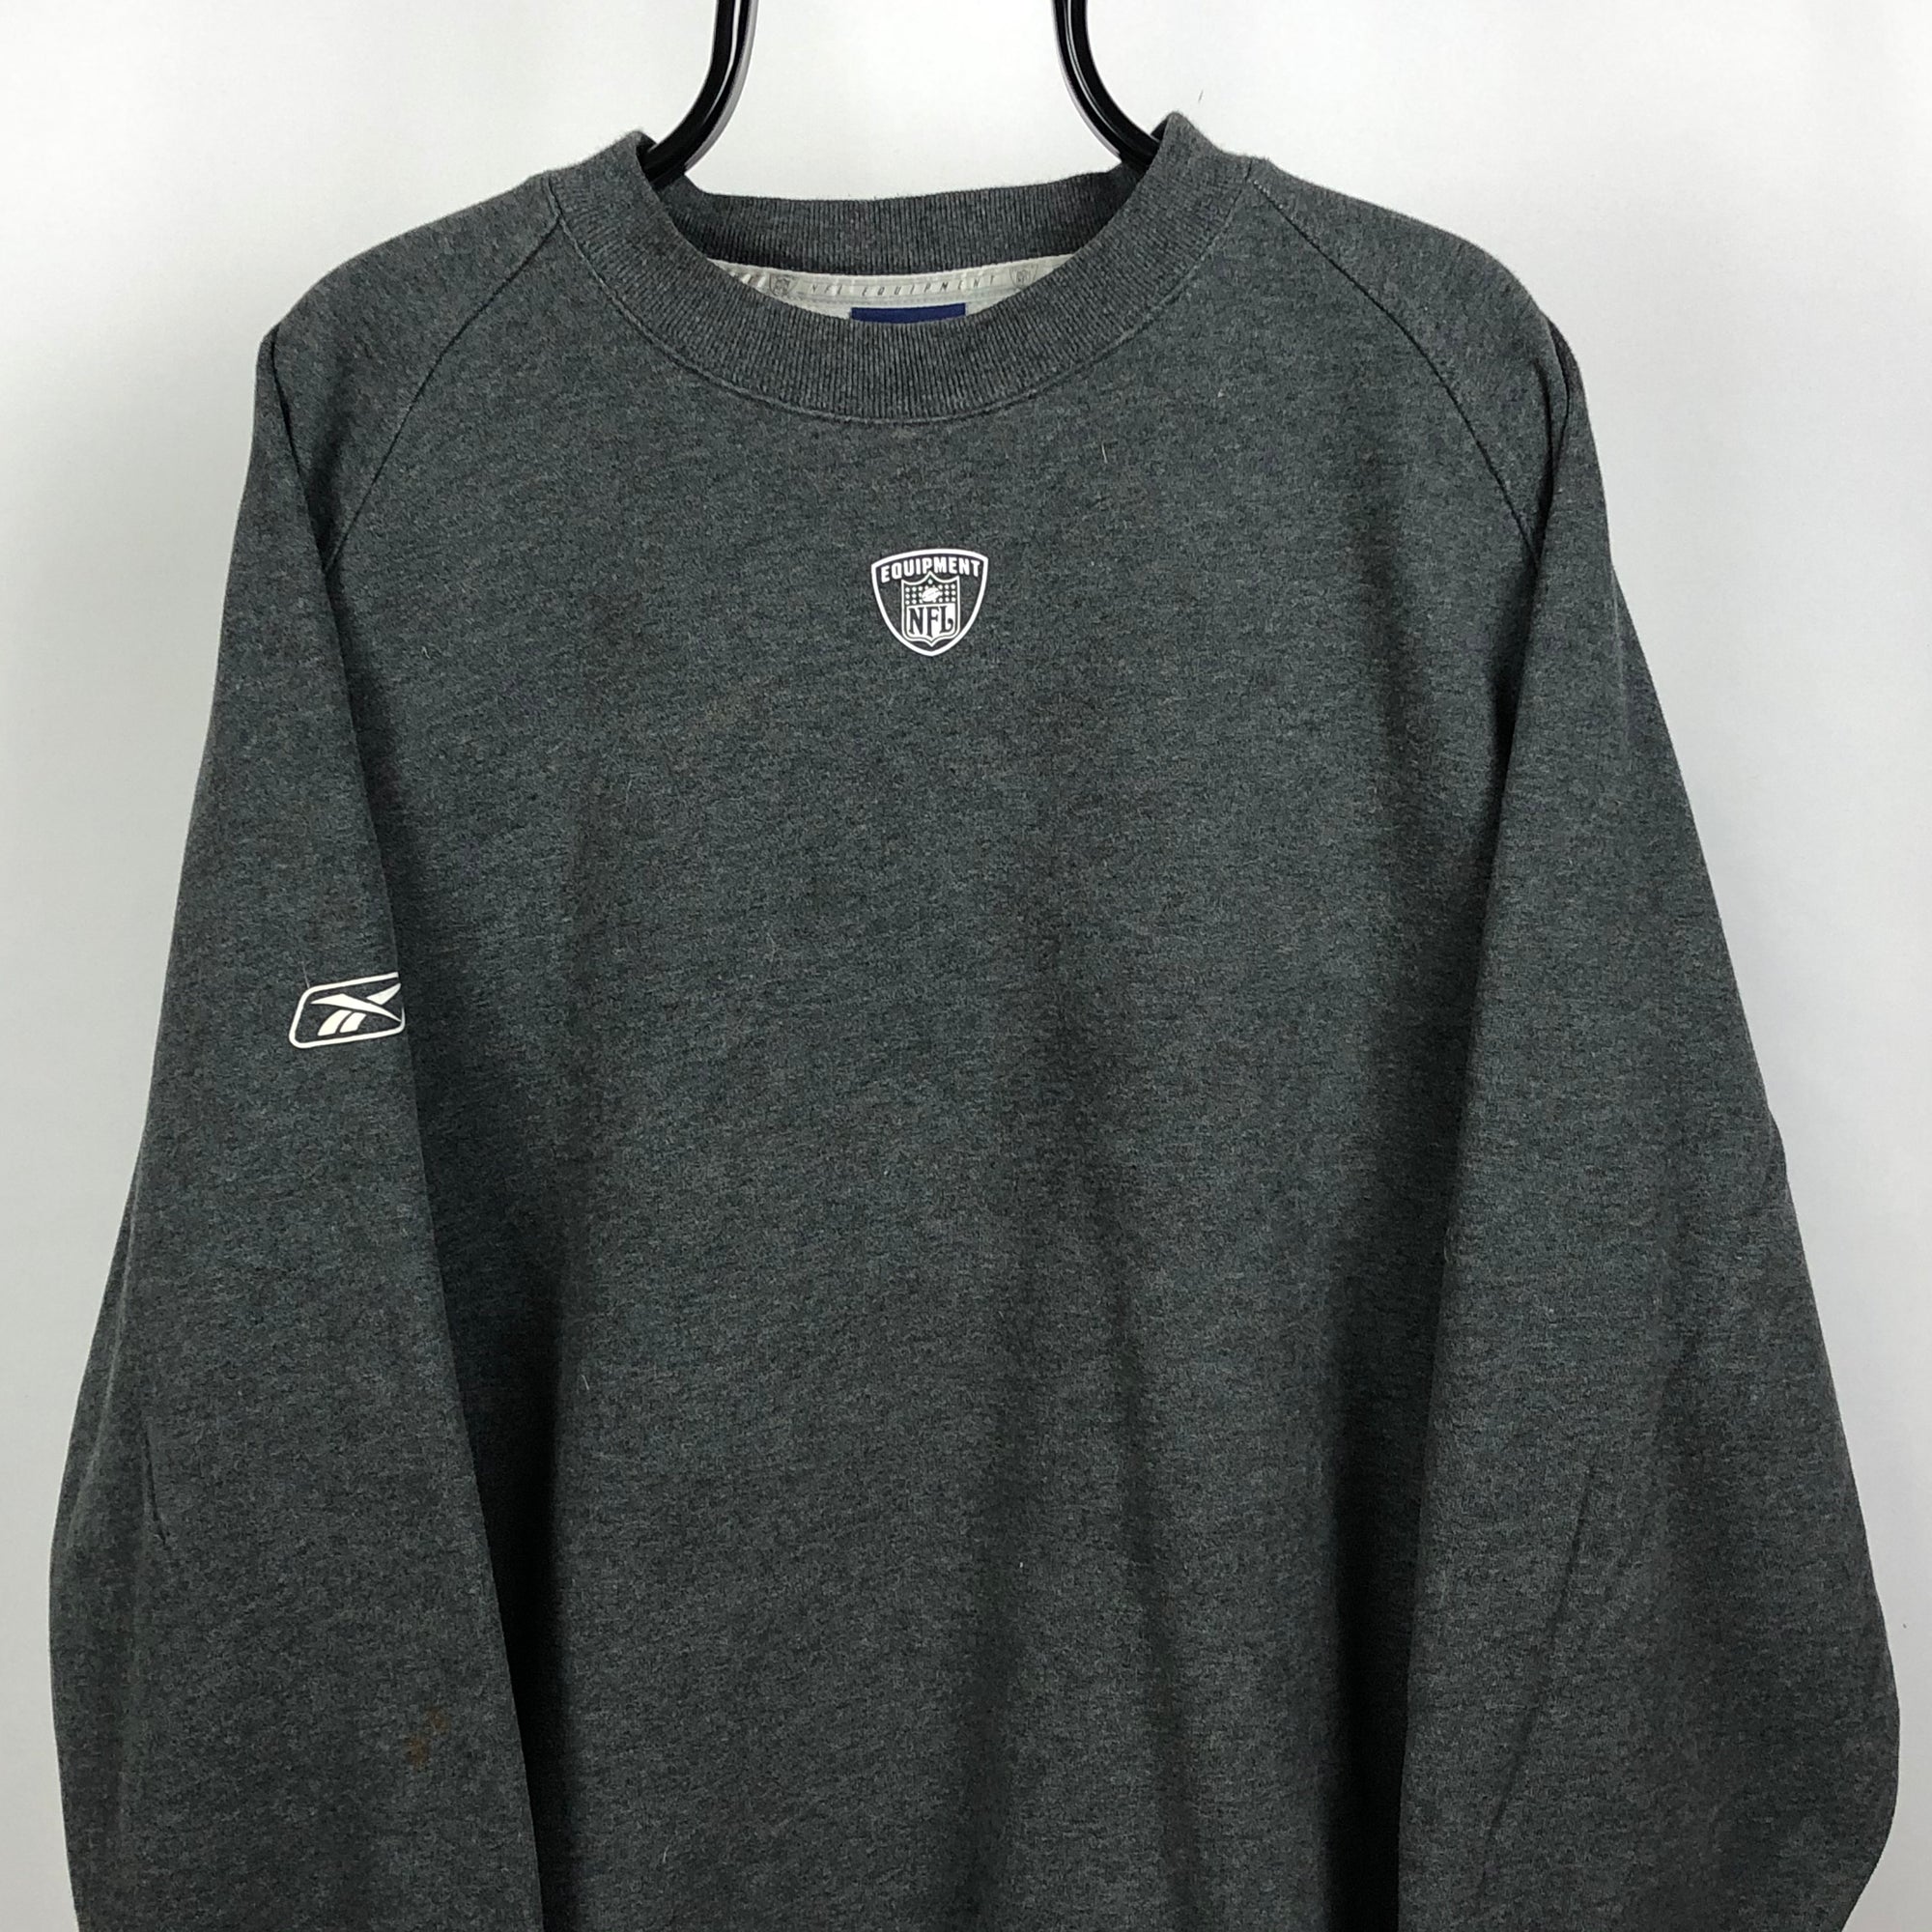 Reebok NFL Equipment Heavyweight Sweatshirt - Men's Large/Women's XL